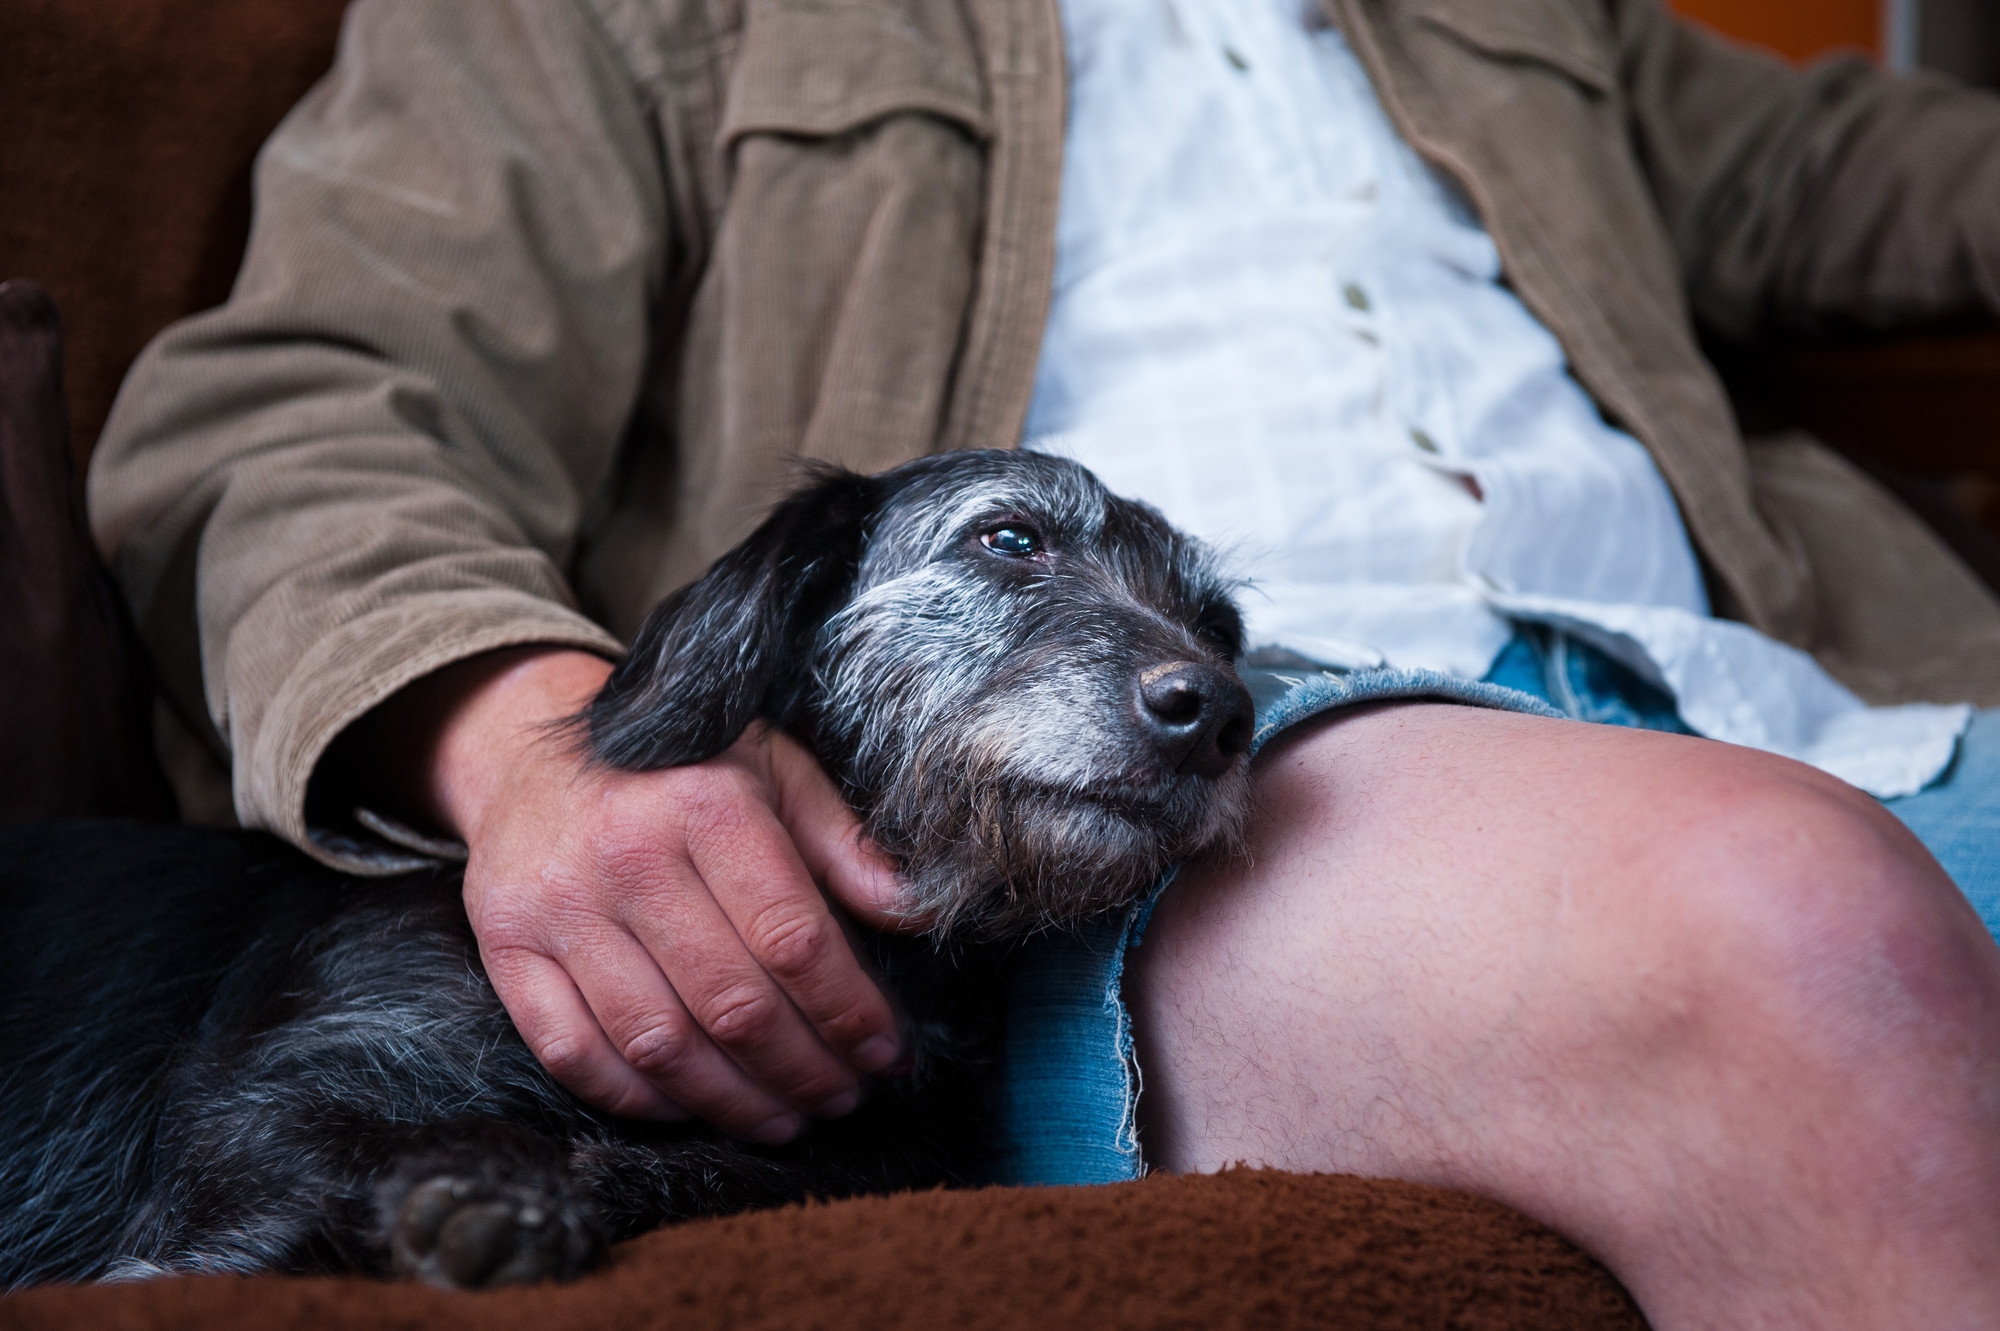 Bedlington terrier cross Brandy with her new owner